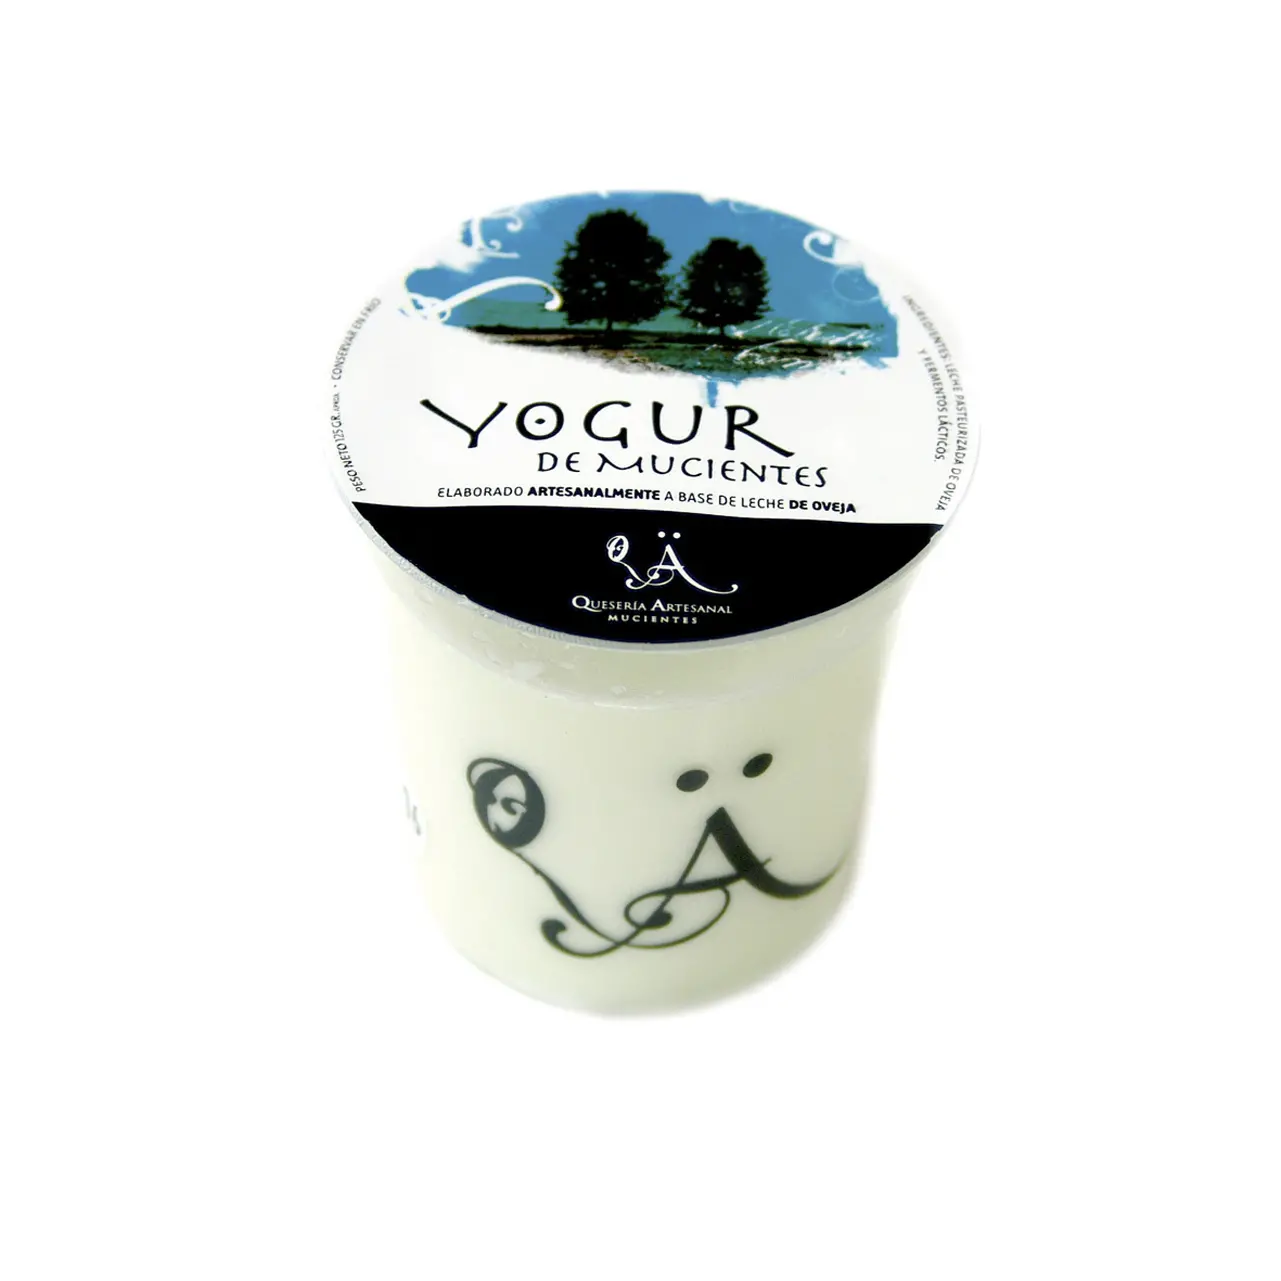 Queseria Artesana Mucientes yogur natural.webp